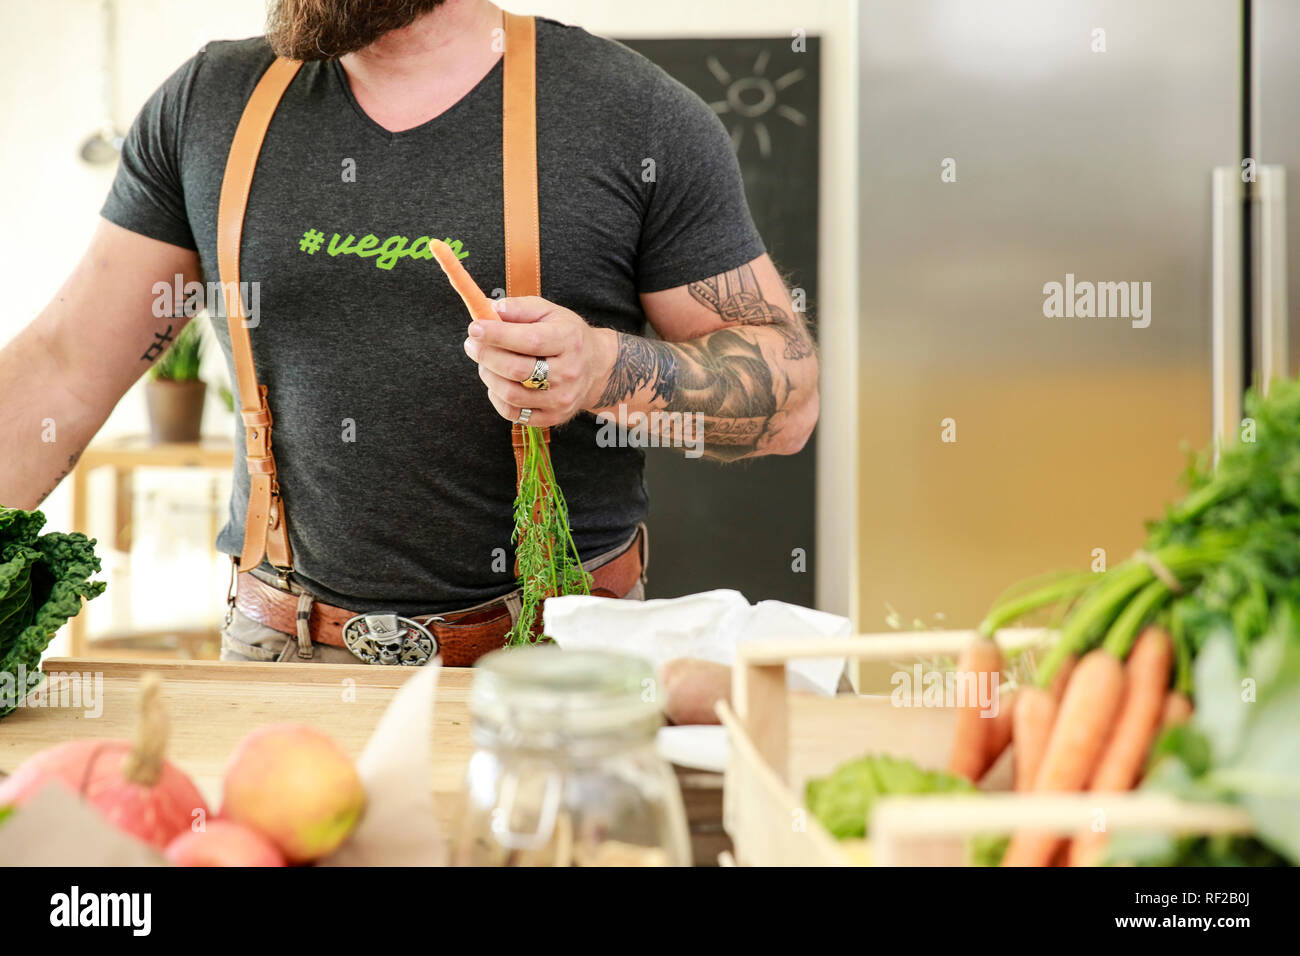 Vegan man holding carrot in his kitchen Stock Photo - Alamy